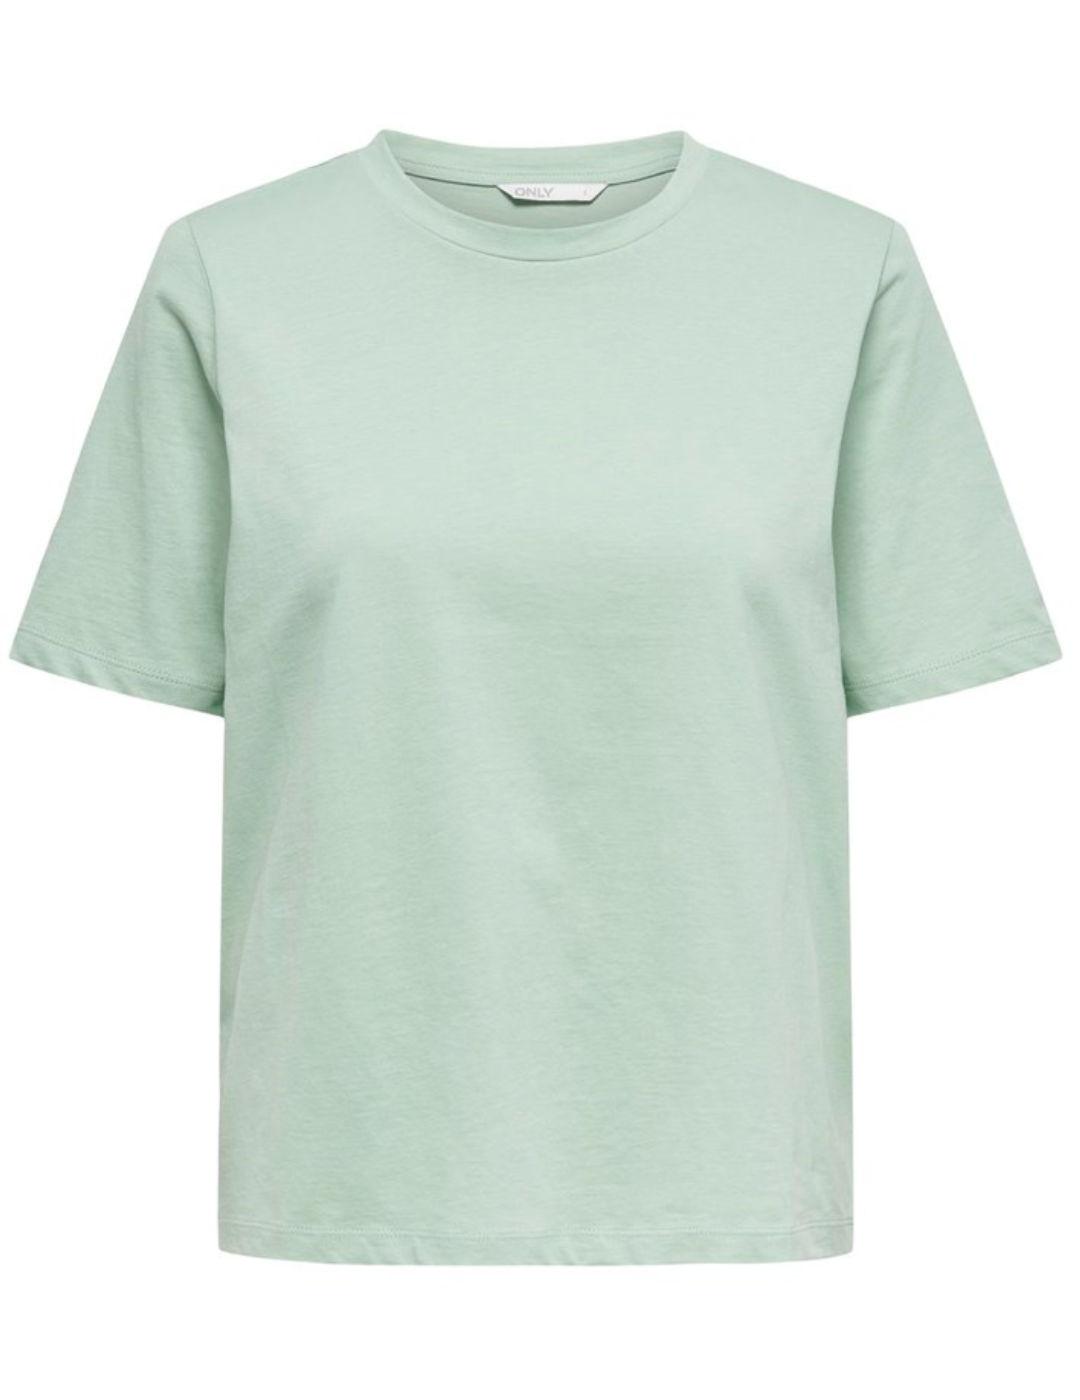 Camiseta Only verde agua manga corta para mujer